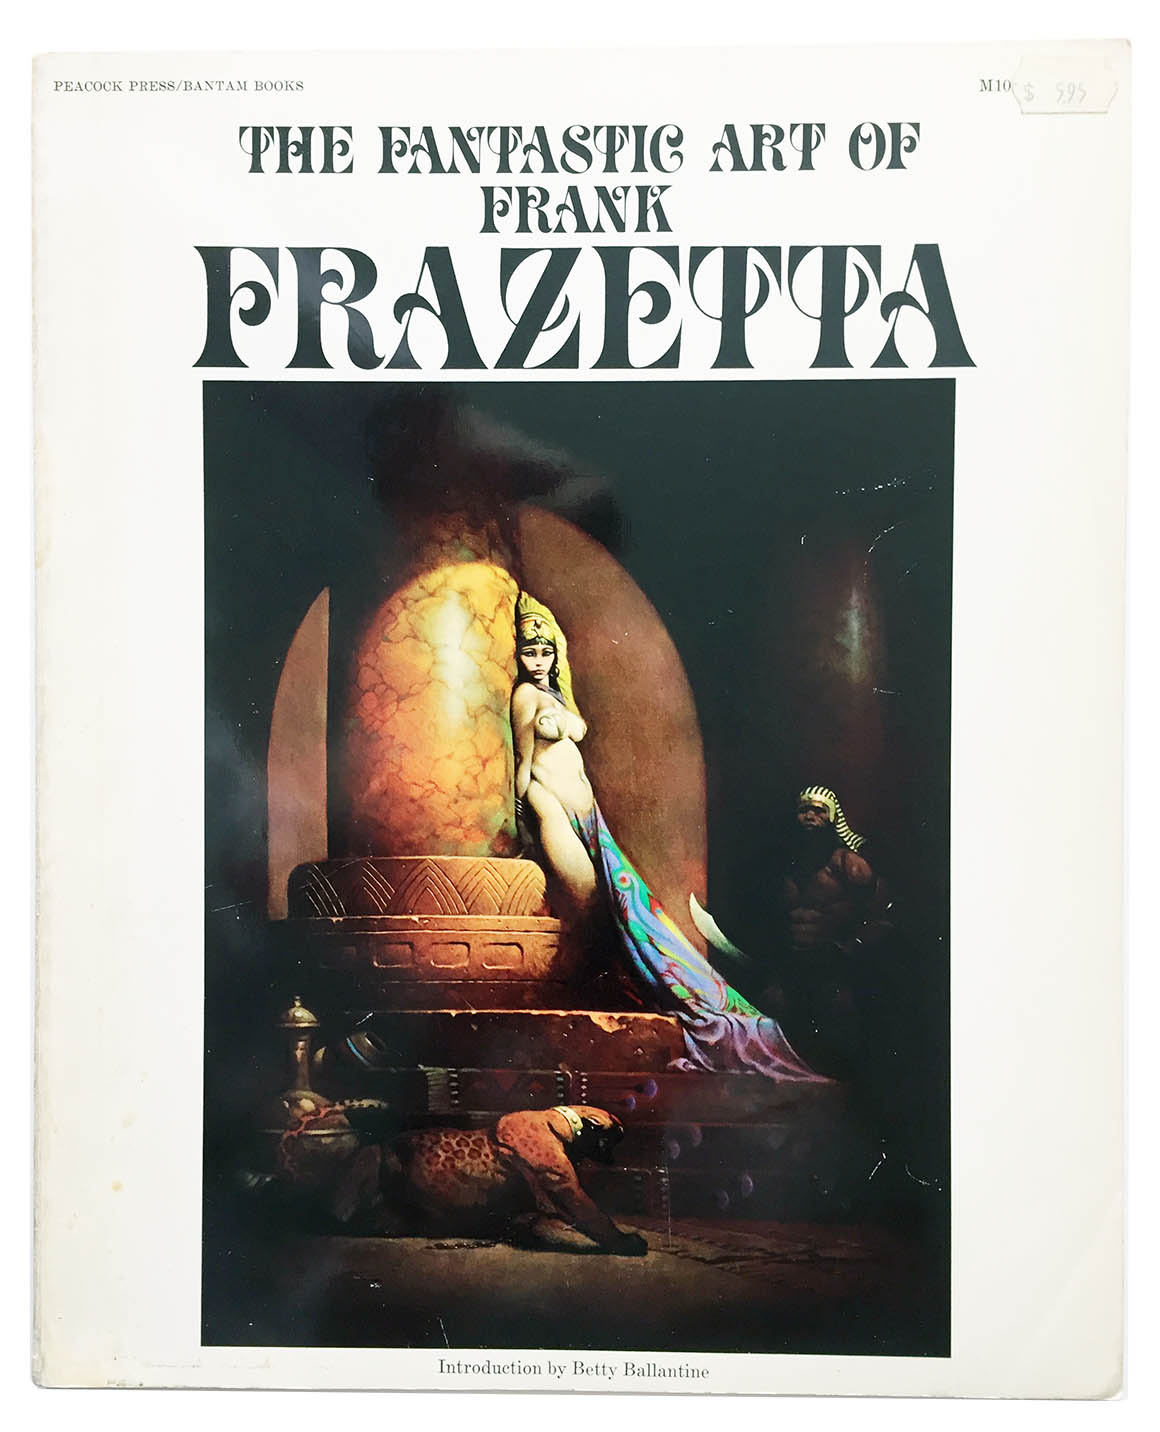 Fantastic Art of Frank Frazetta Vol. 1